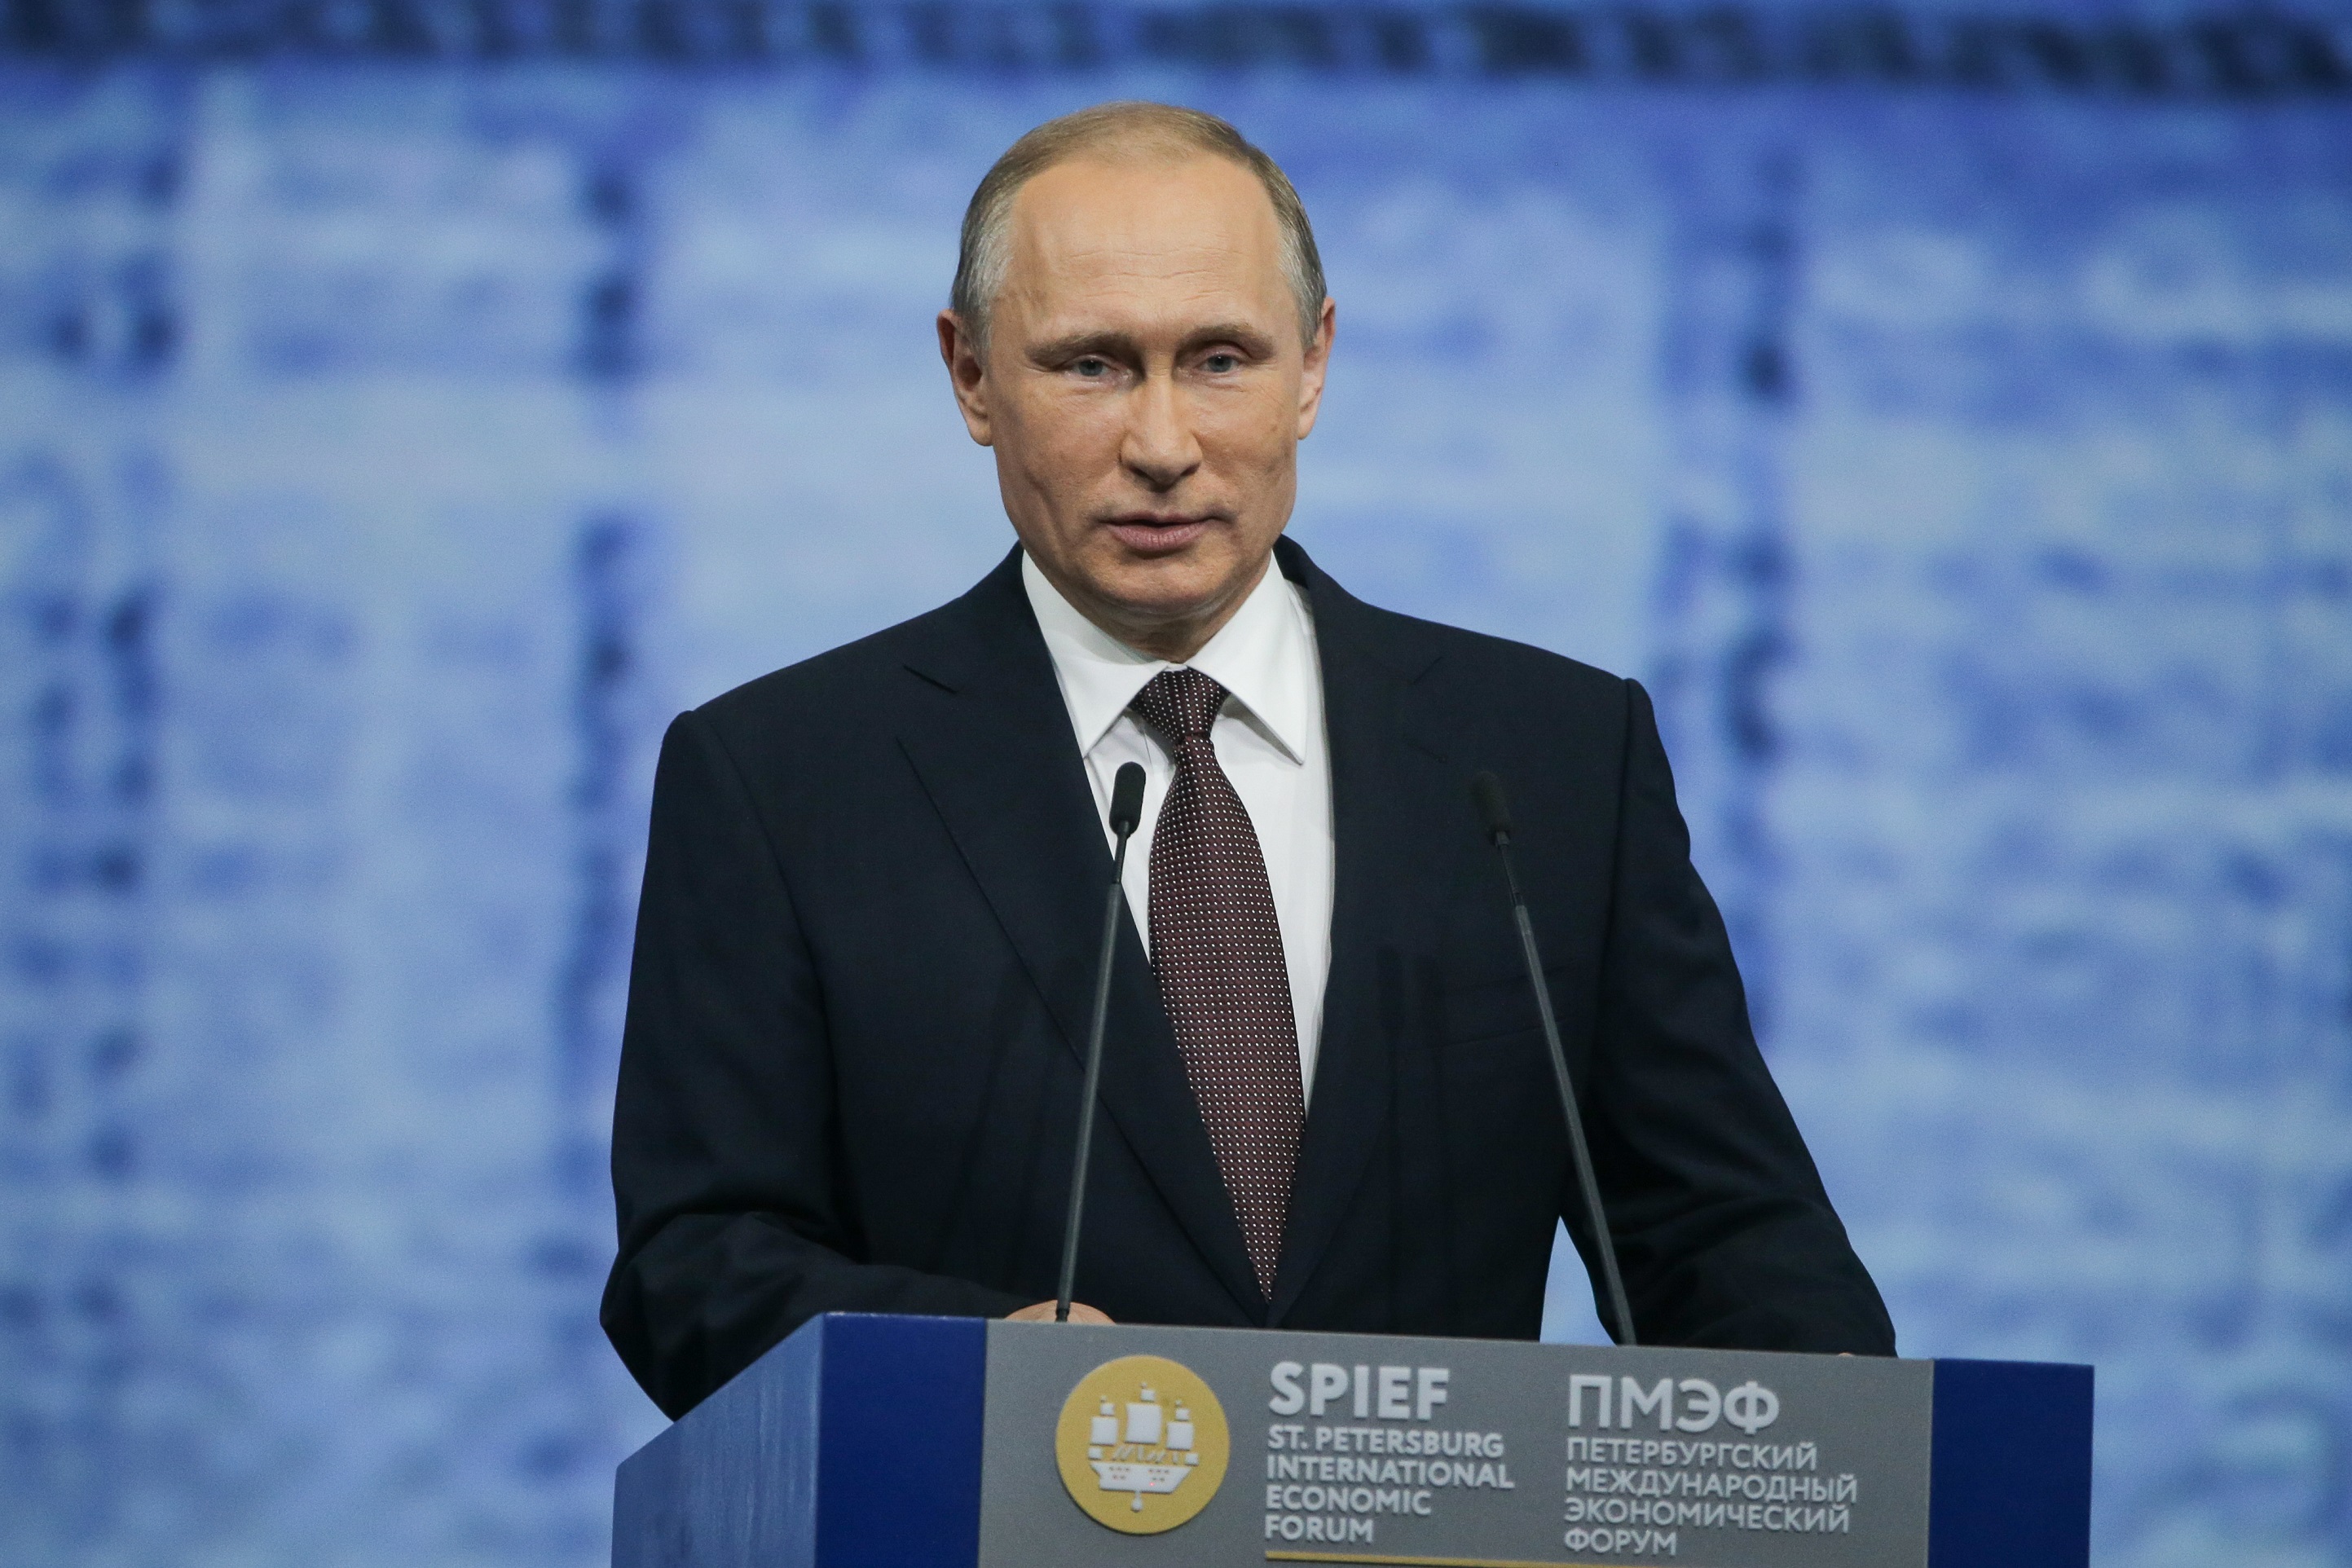 Vladimir Putin Sends Greetings to Participants of St. Petersburg International Economic Forum